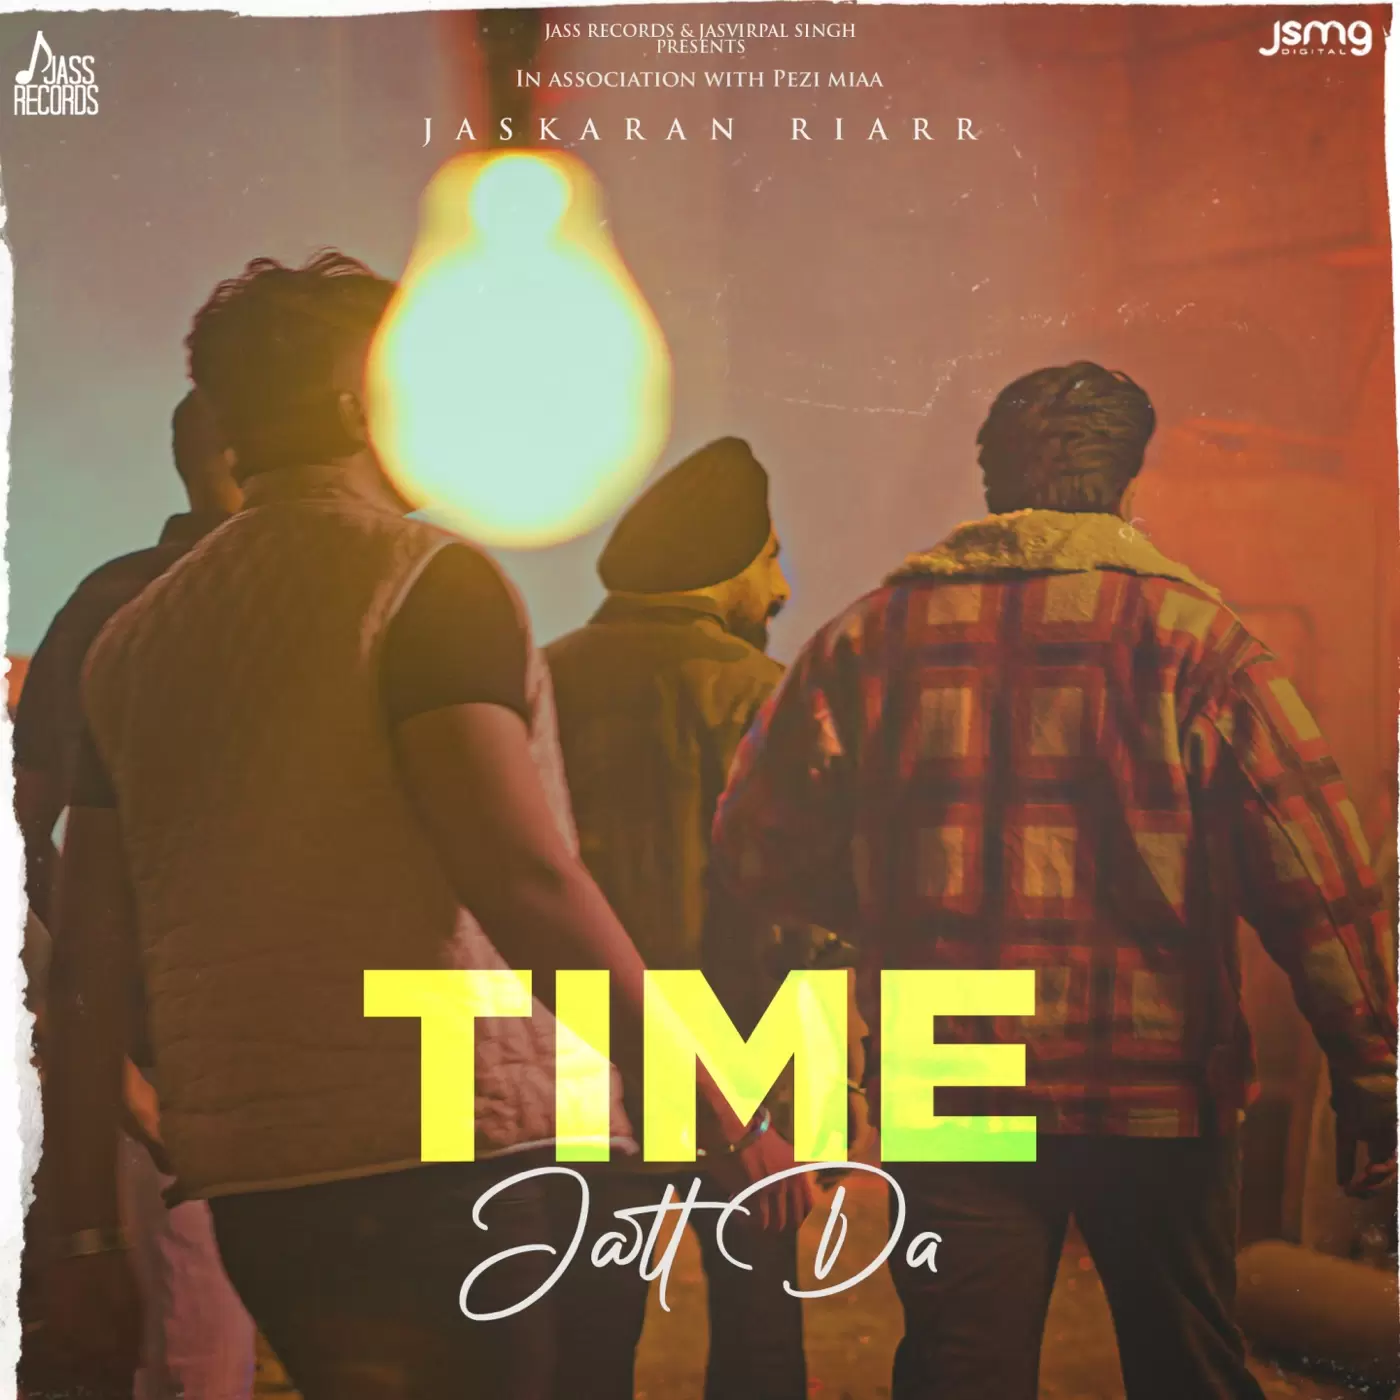 Time Jatt Da - Single Song by Jaskaran Riarr - Mr-Punjab